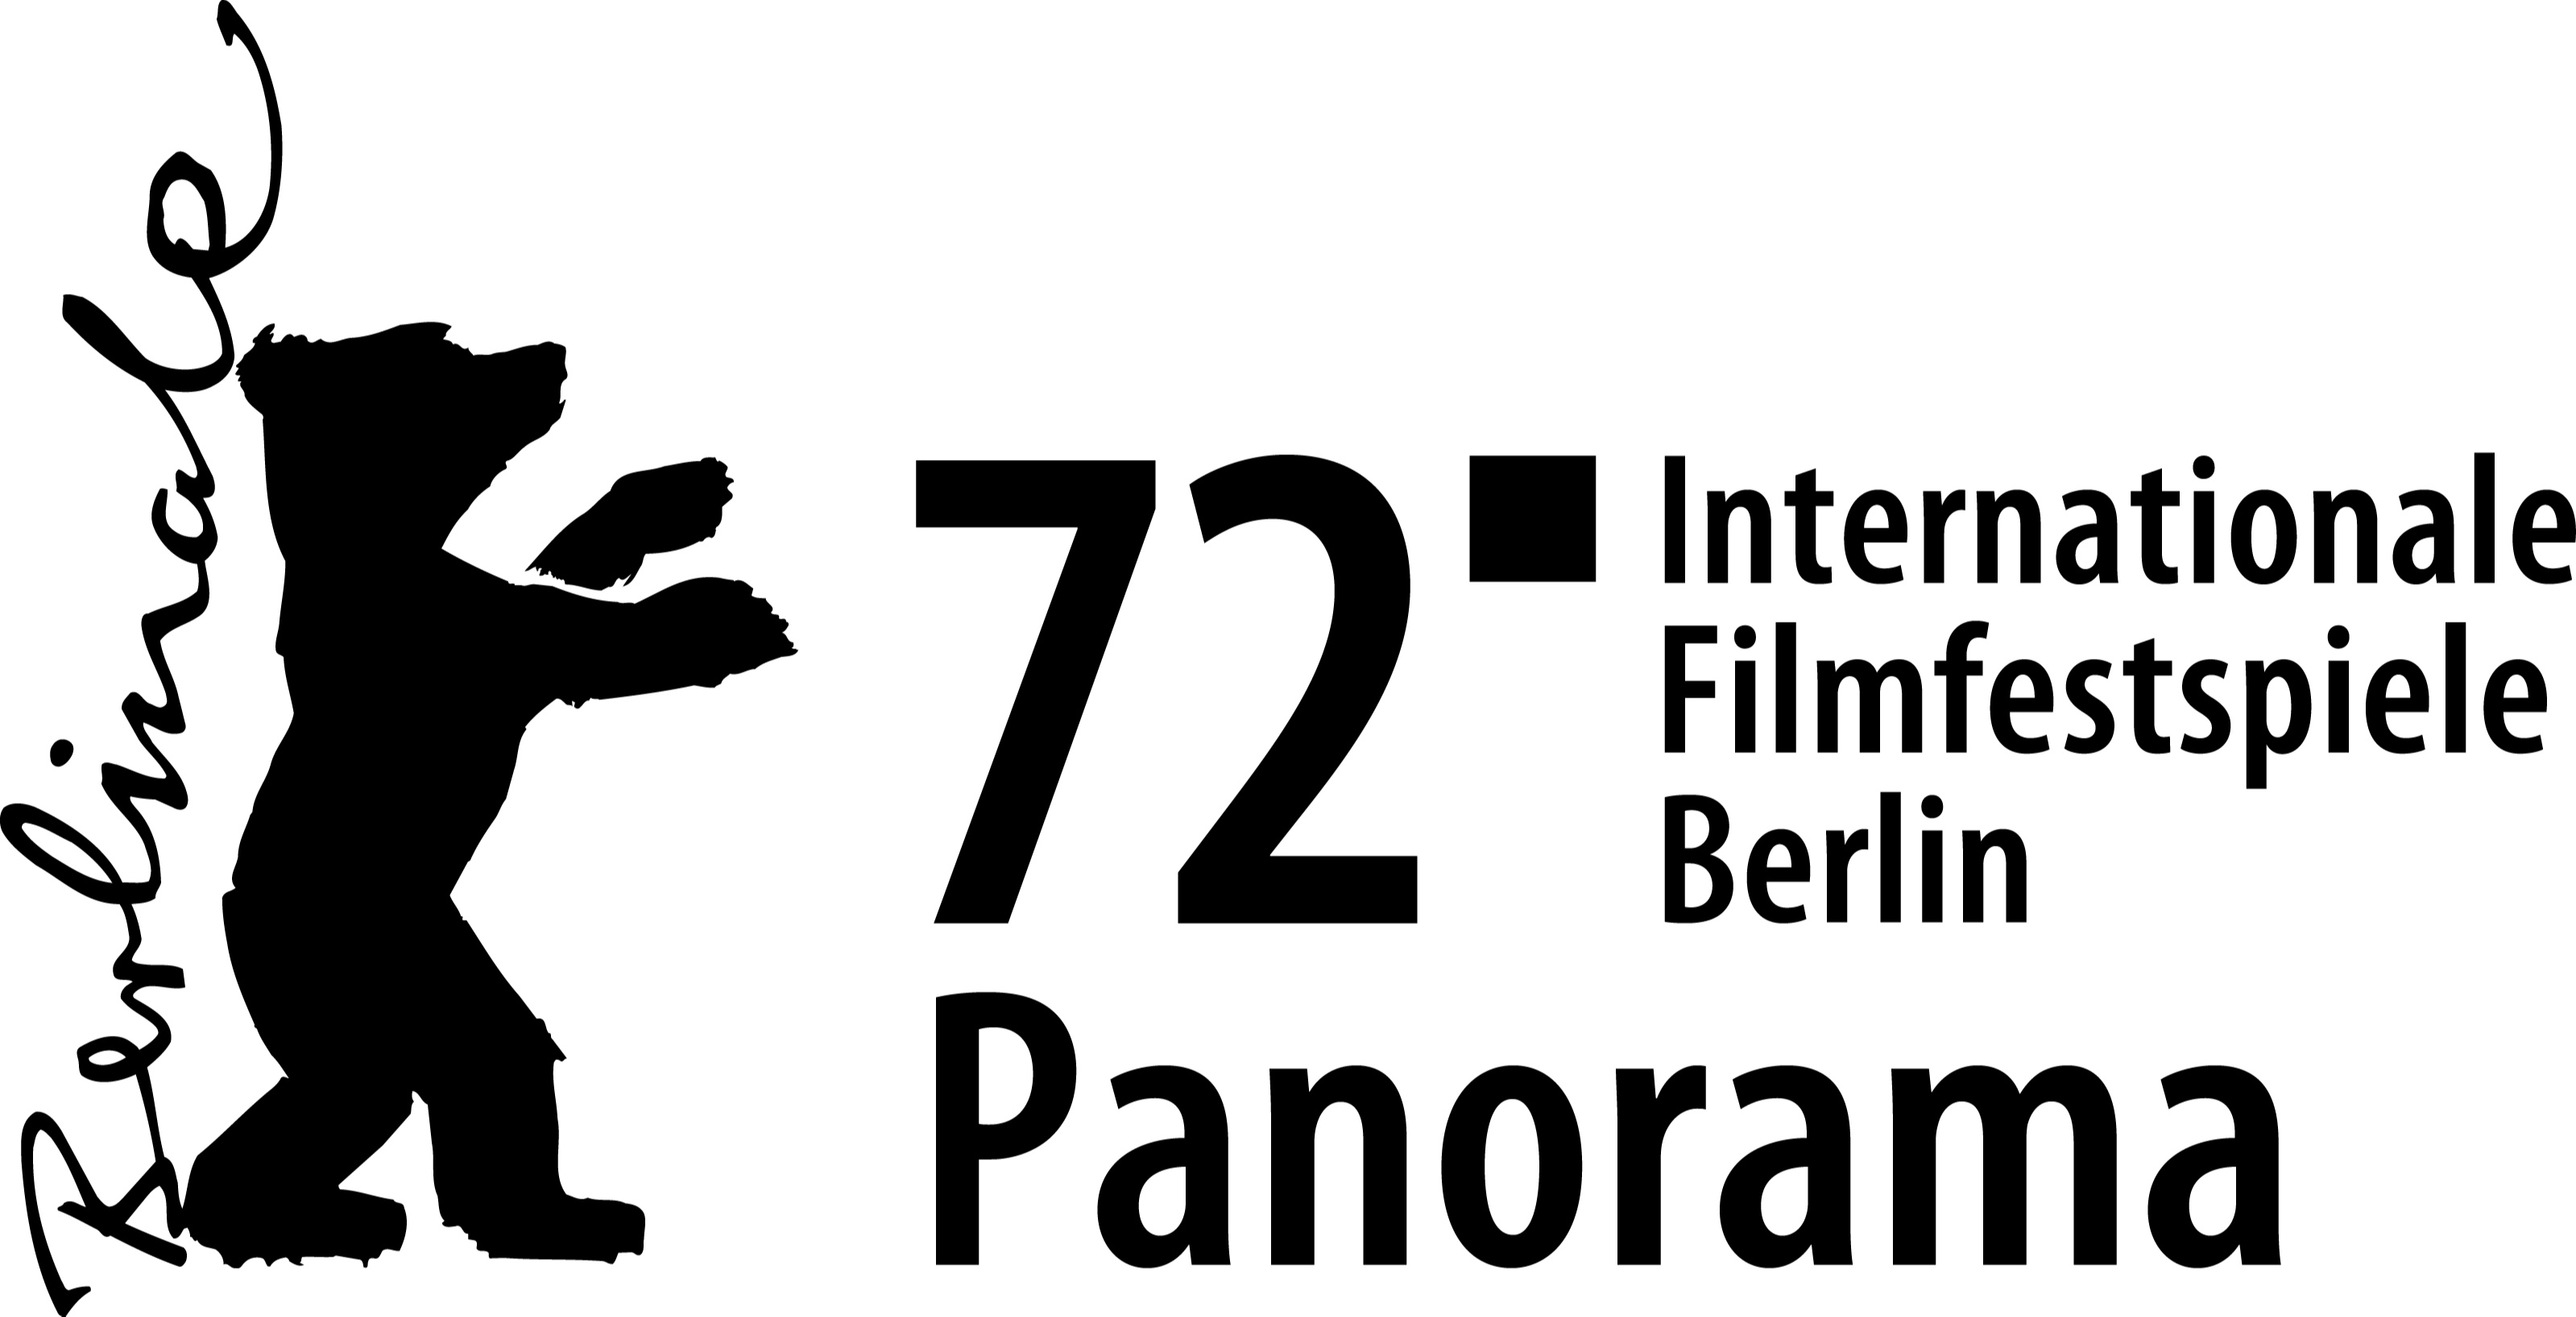 Berlinale 72 - Panorama